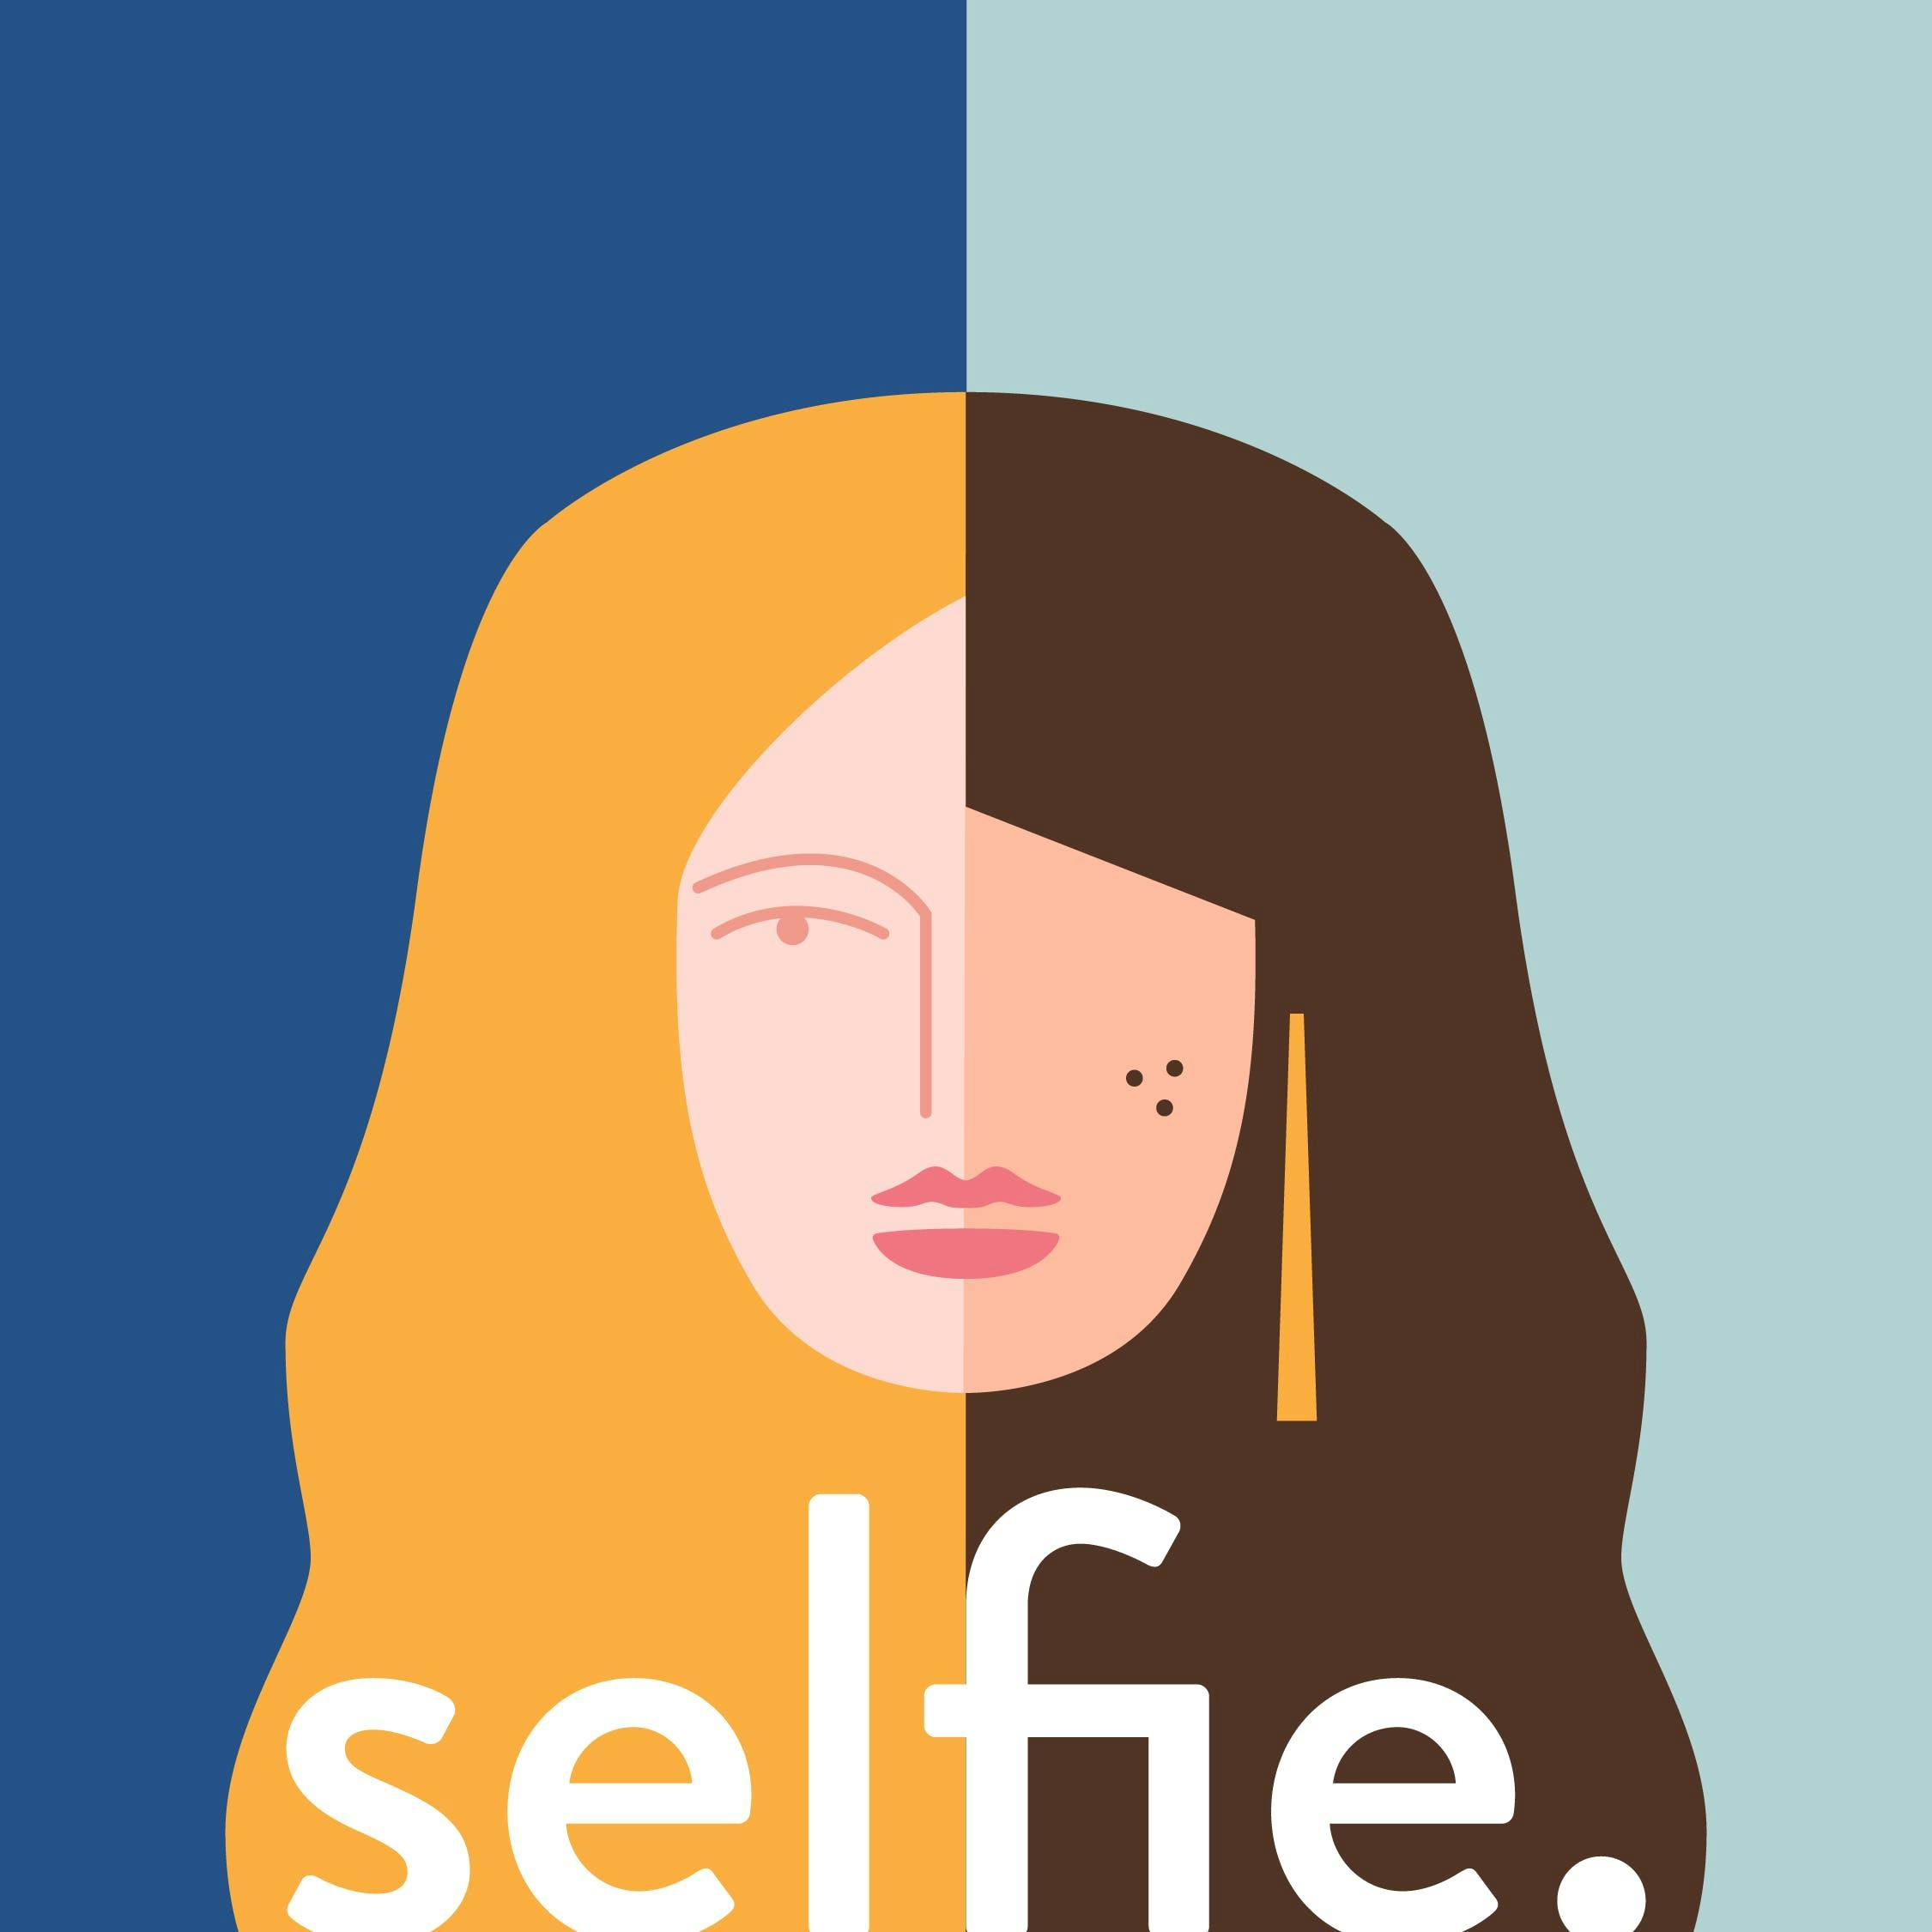 Rebekah Lyons on Finding Your Self-Care Rhythms: Selfie Episode 102